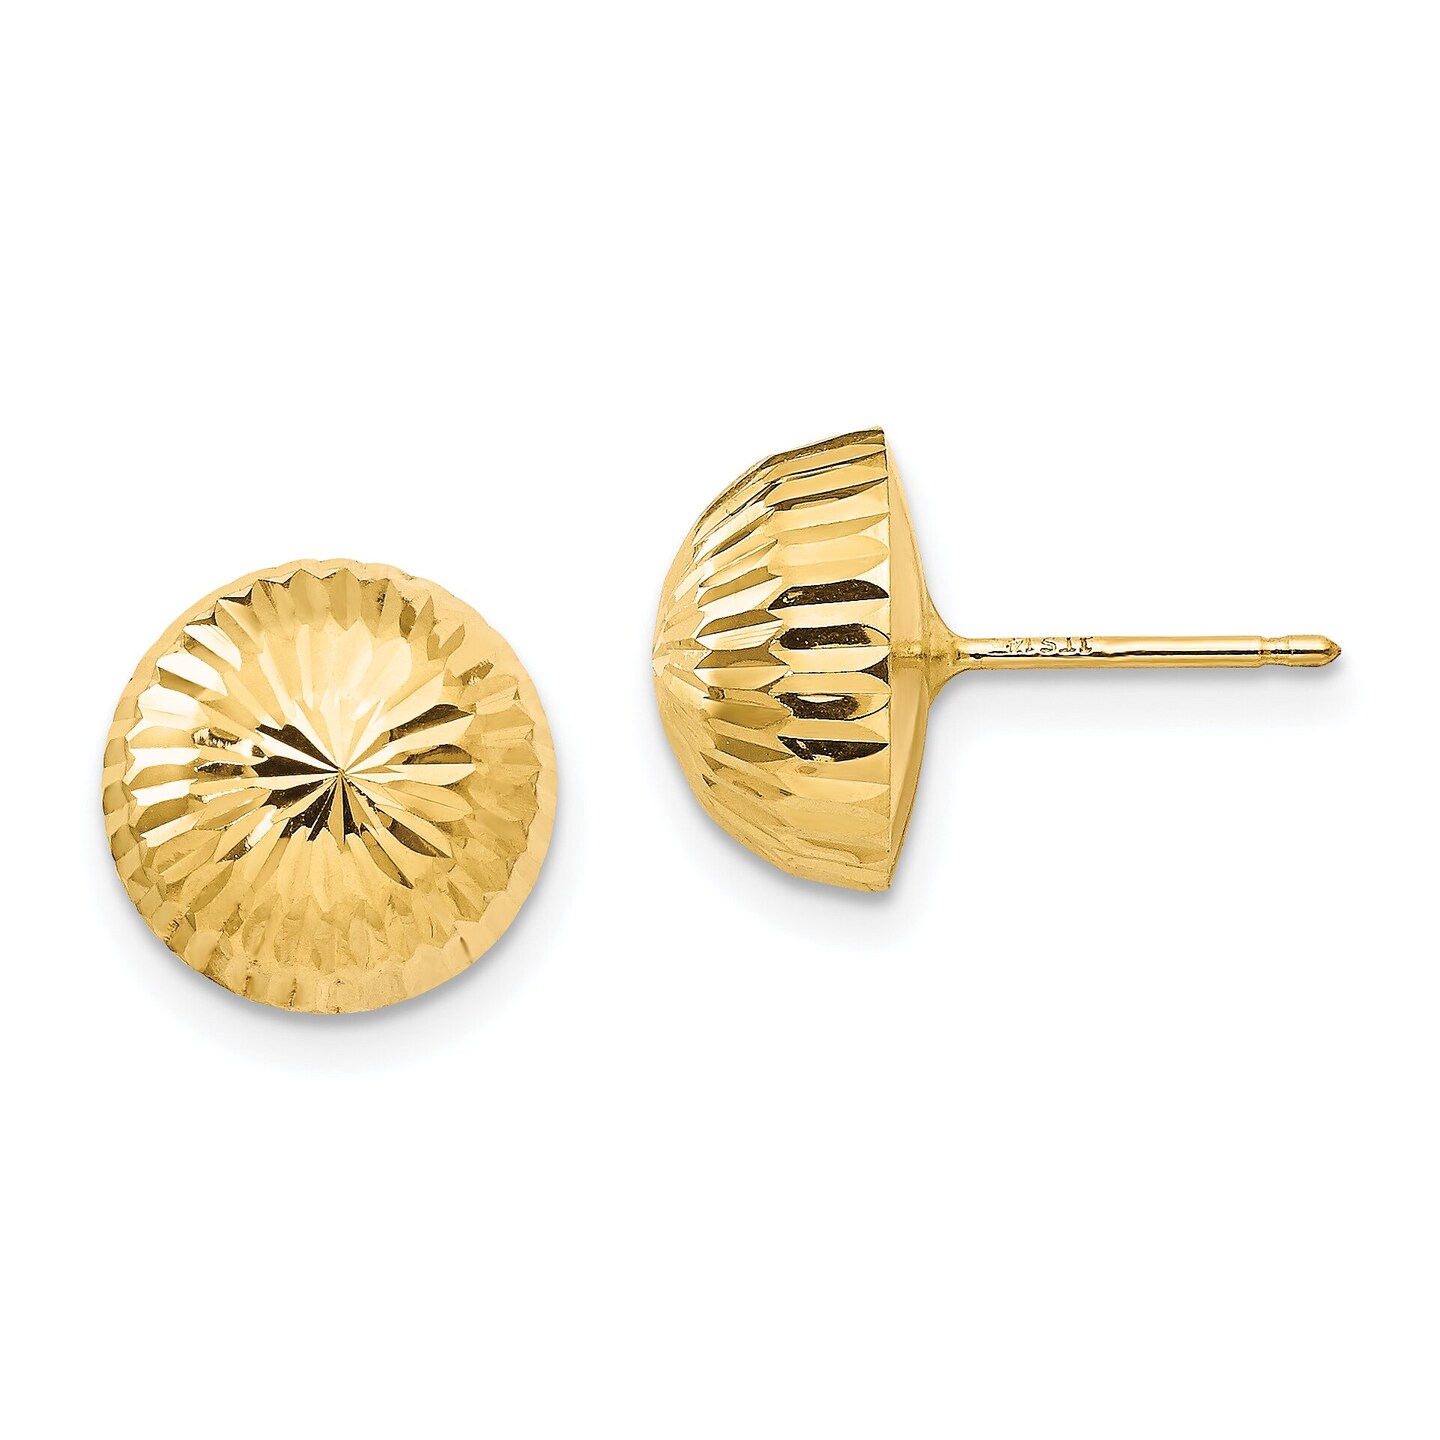 14K Gold Button Stud Earrings Jewelry FindingKing 10mm 10mm x 10mm